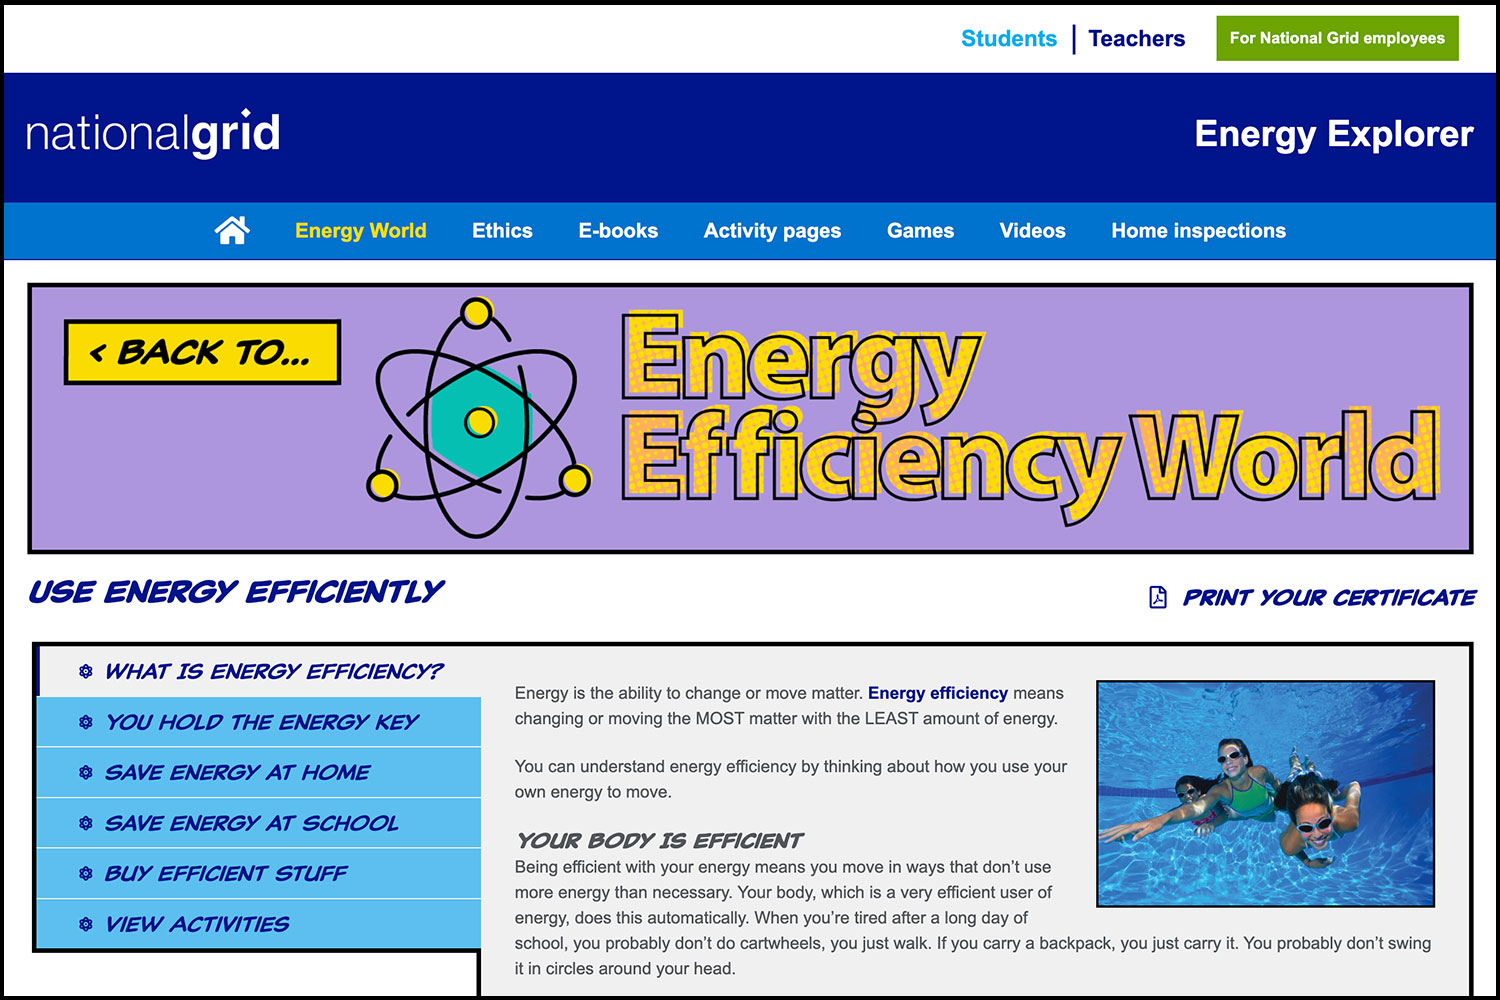 National Grid Energy Explorer website landing page for Energy Efficiency World